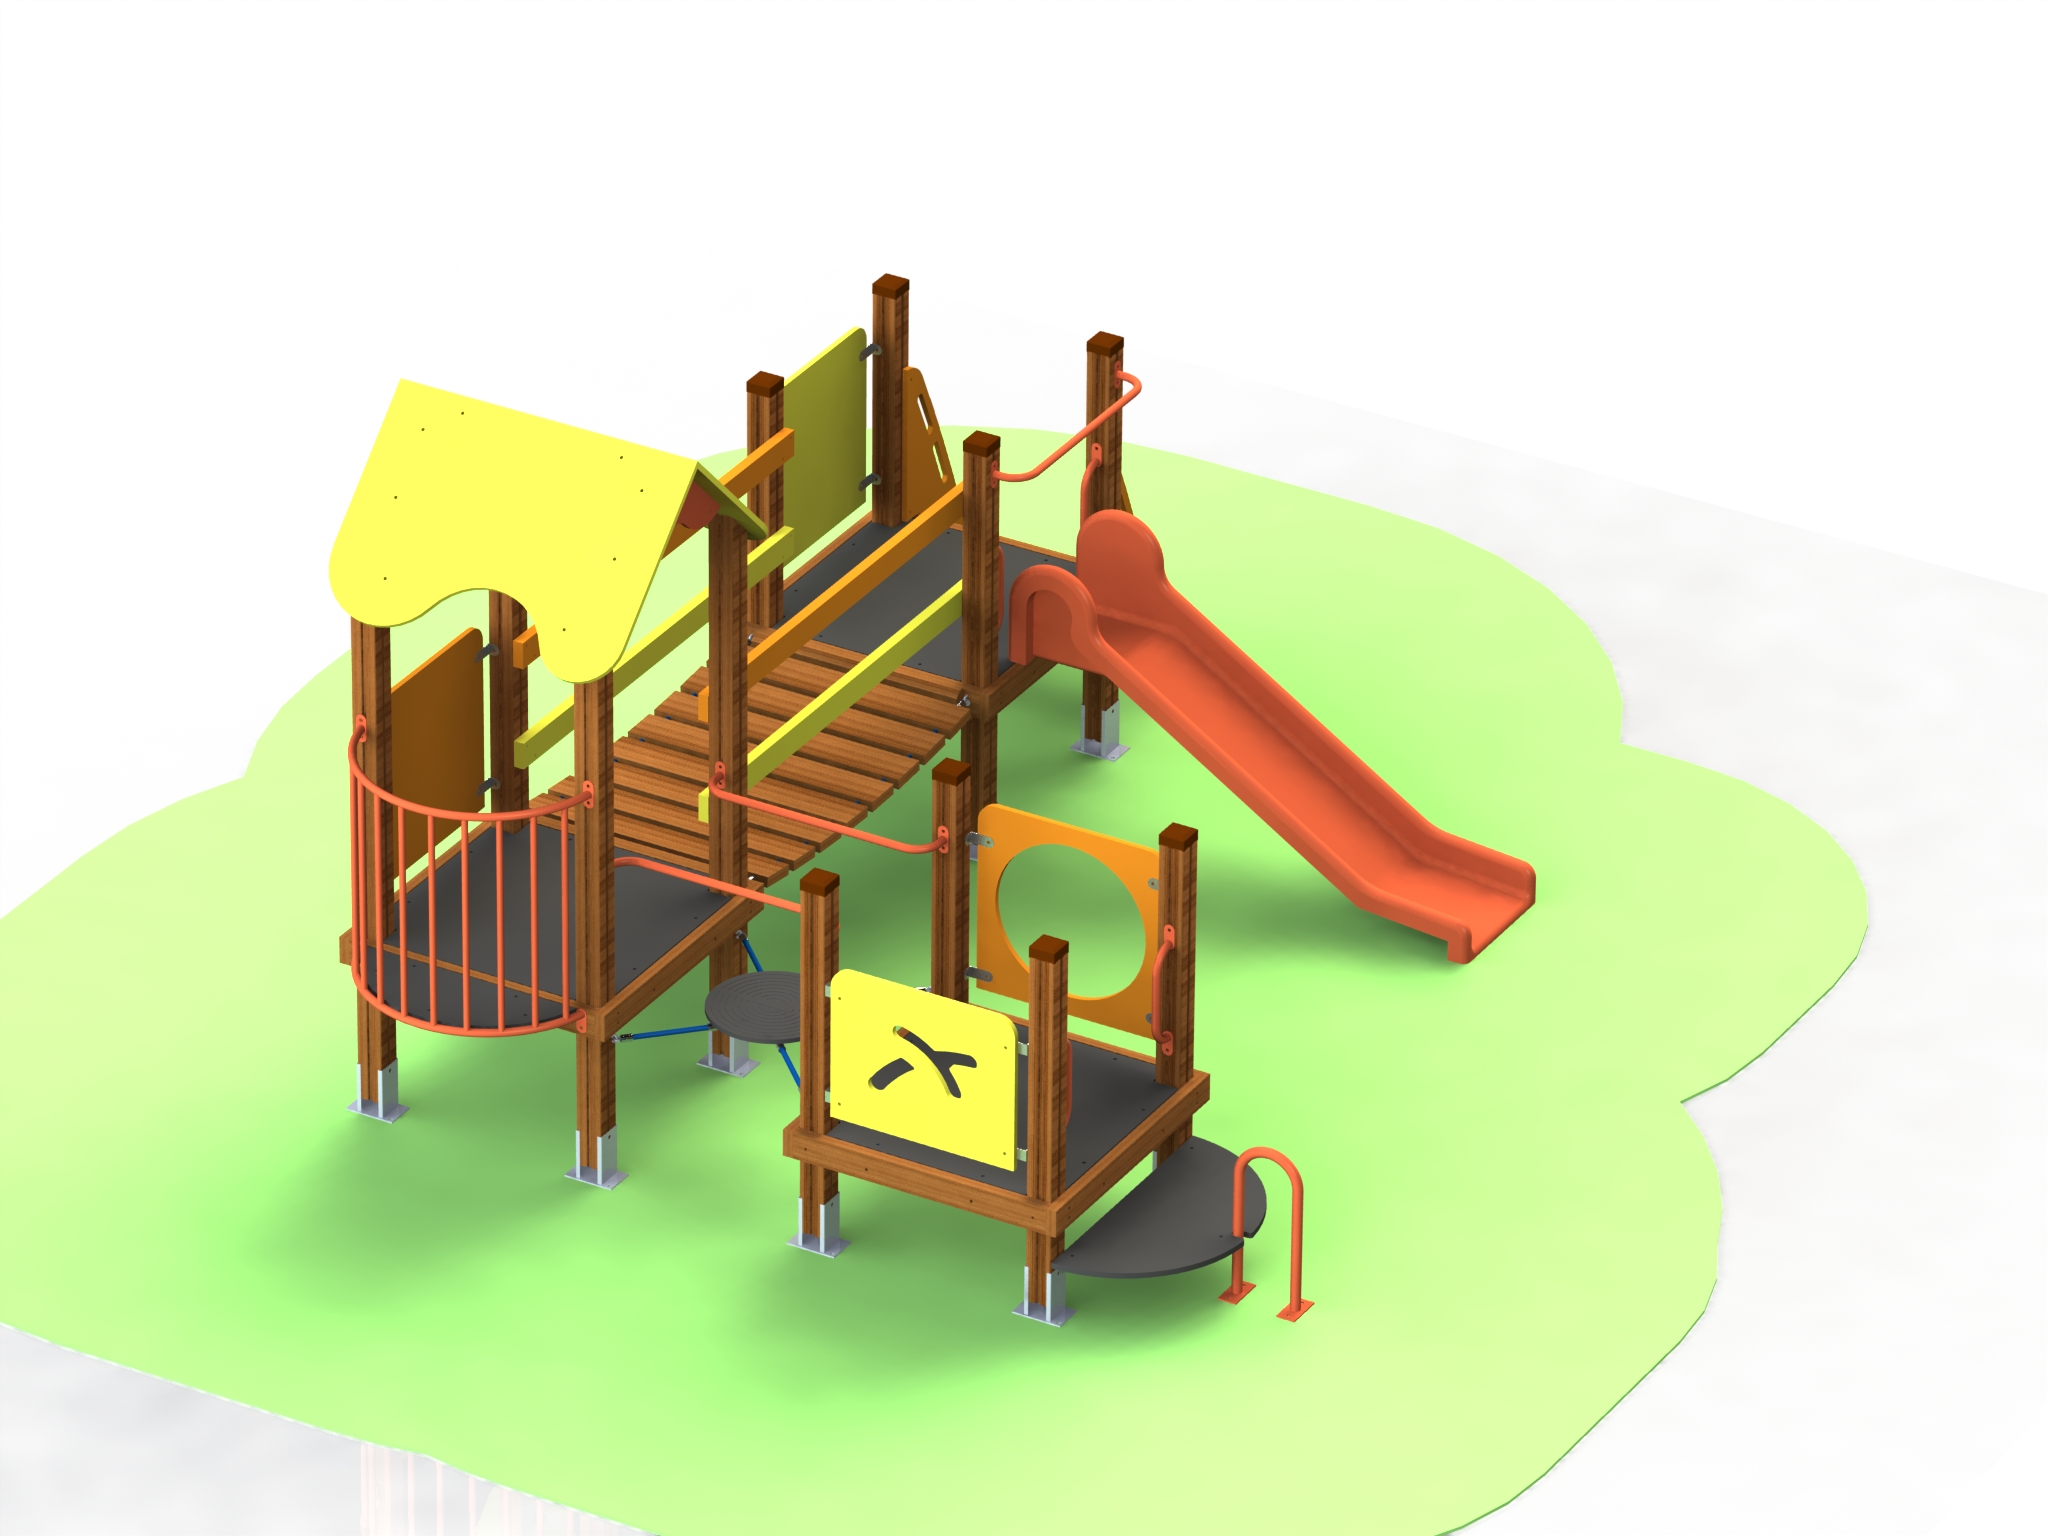 Combined playground equipment, model КД49